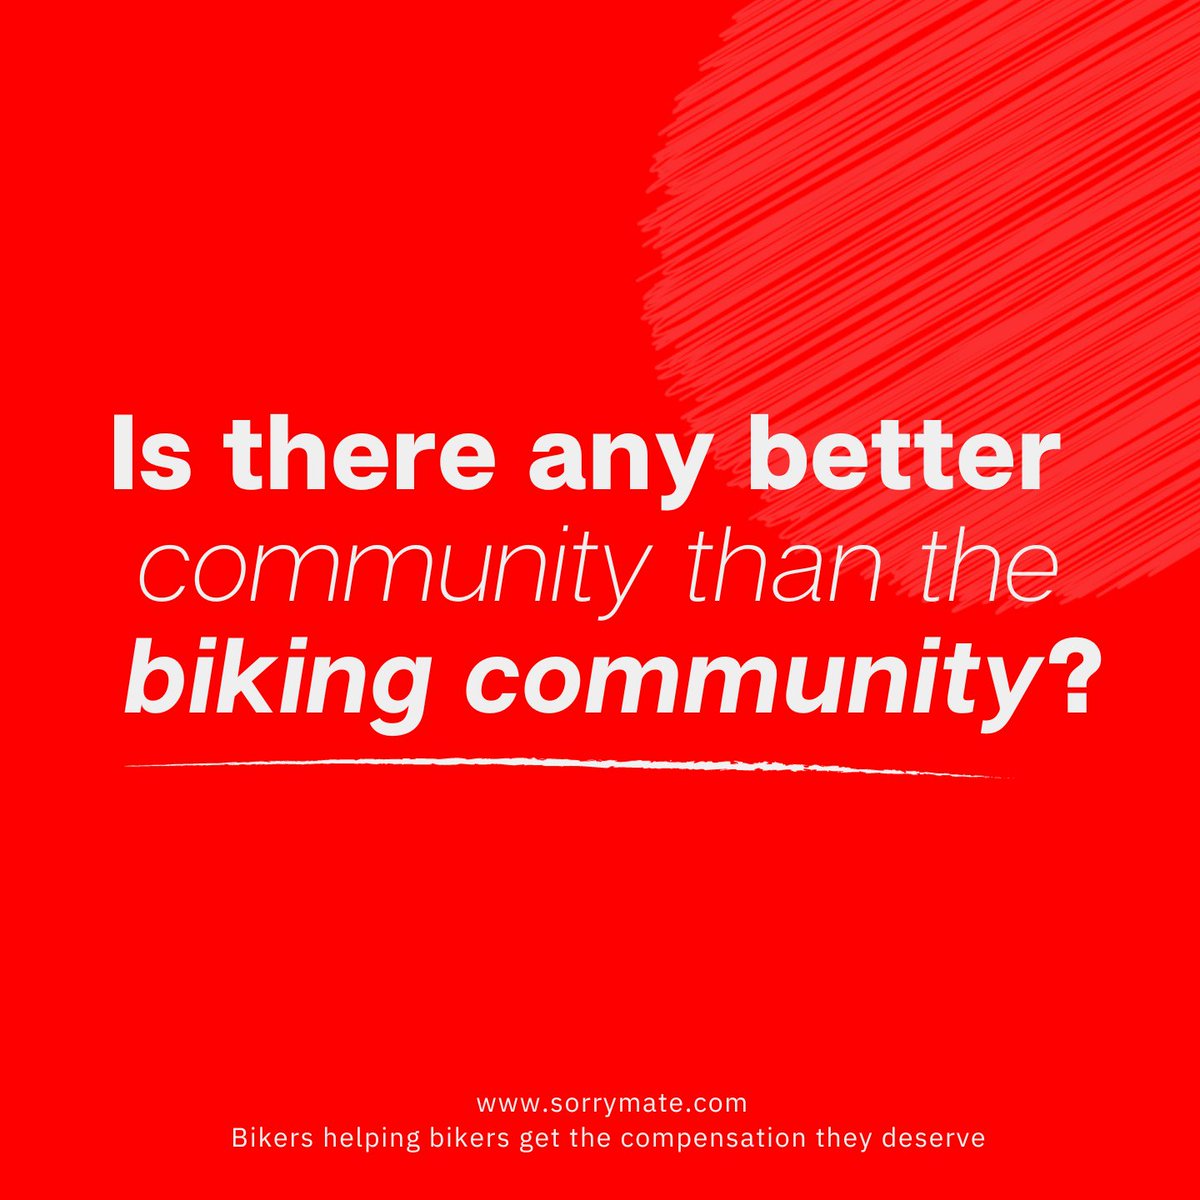 We think not. 🏍🤗
•
•
•
#biker #bikerlife #bikers #bikes #motorbike #motorcycle #motorcyclelife #motorcycles #BikerCommunity #bikelove #biking #bikelovers